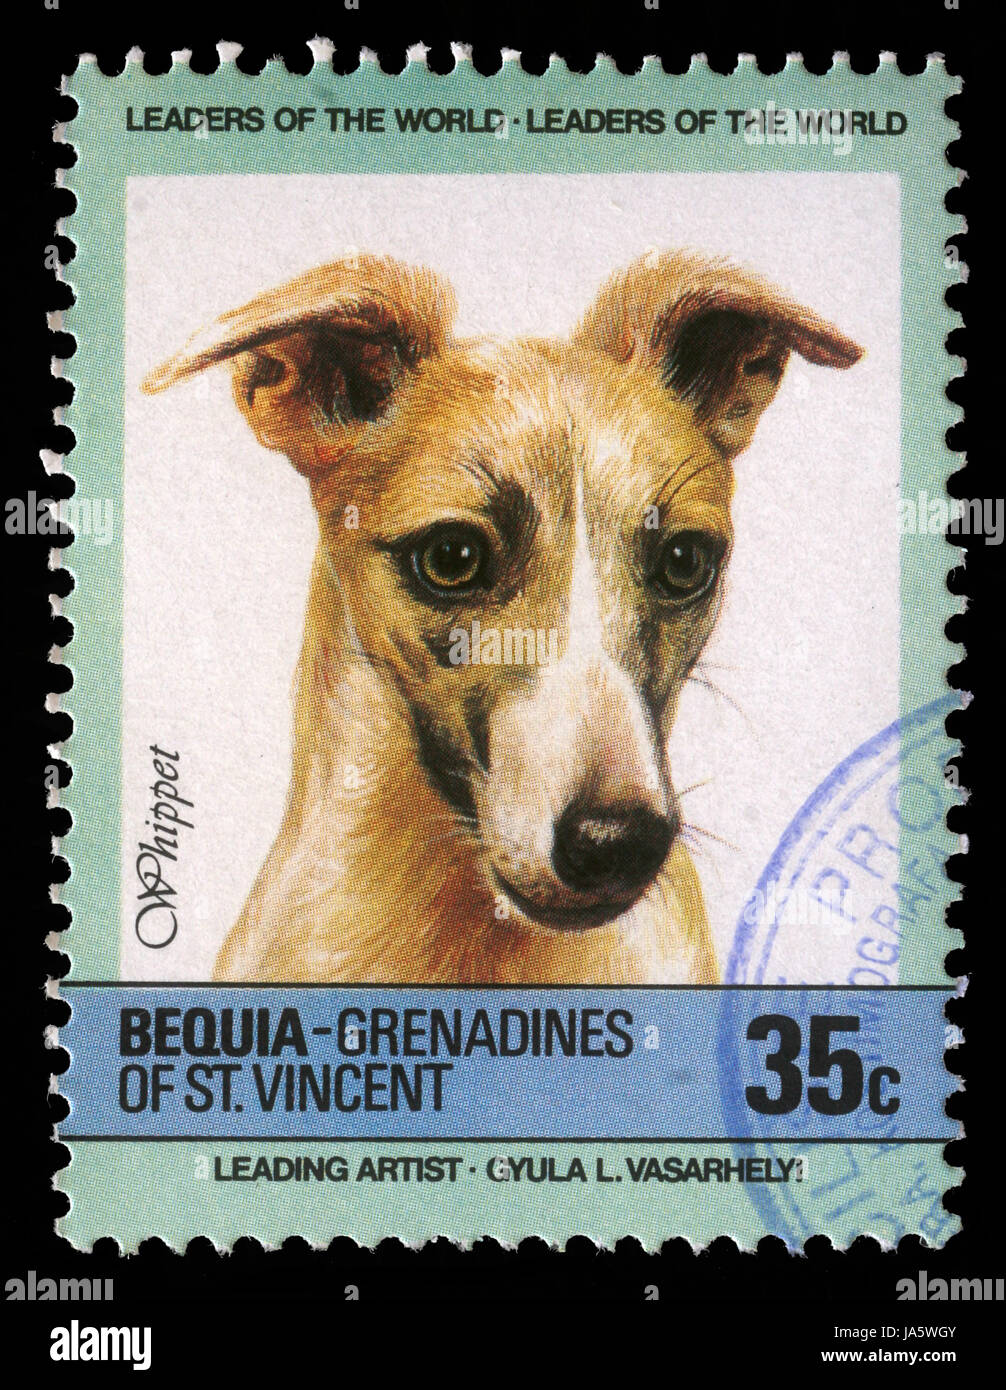 St Vincent e Grenadine francobollo Foto stock - Alamy